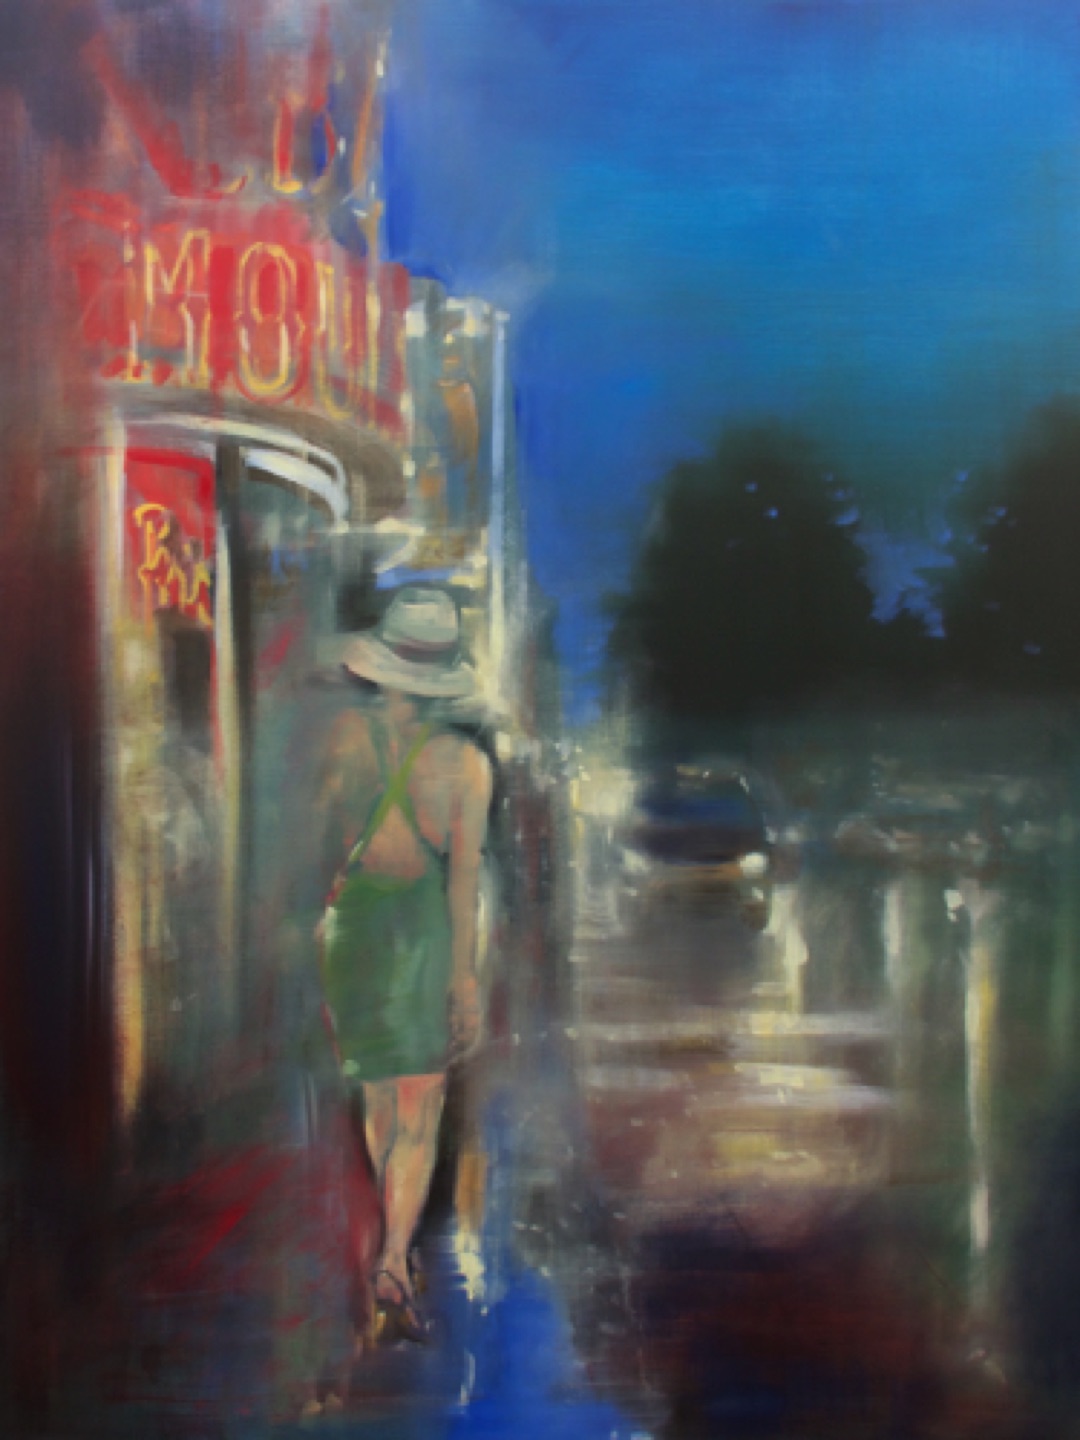 Gregg Chadwick
Pigalle (Moulin Rouge)
48"x36"oil on linen 2015
John Reynolds Collection, Santa Monica, California